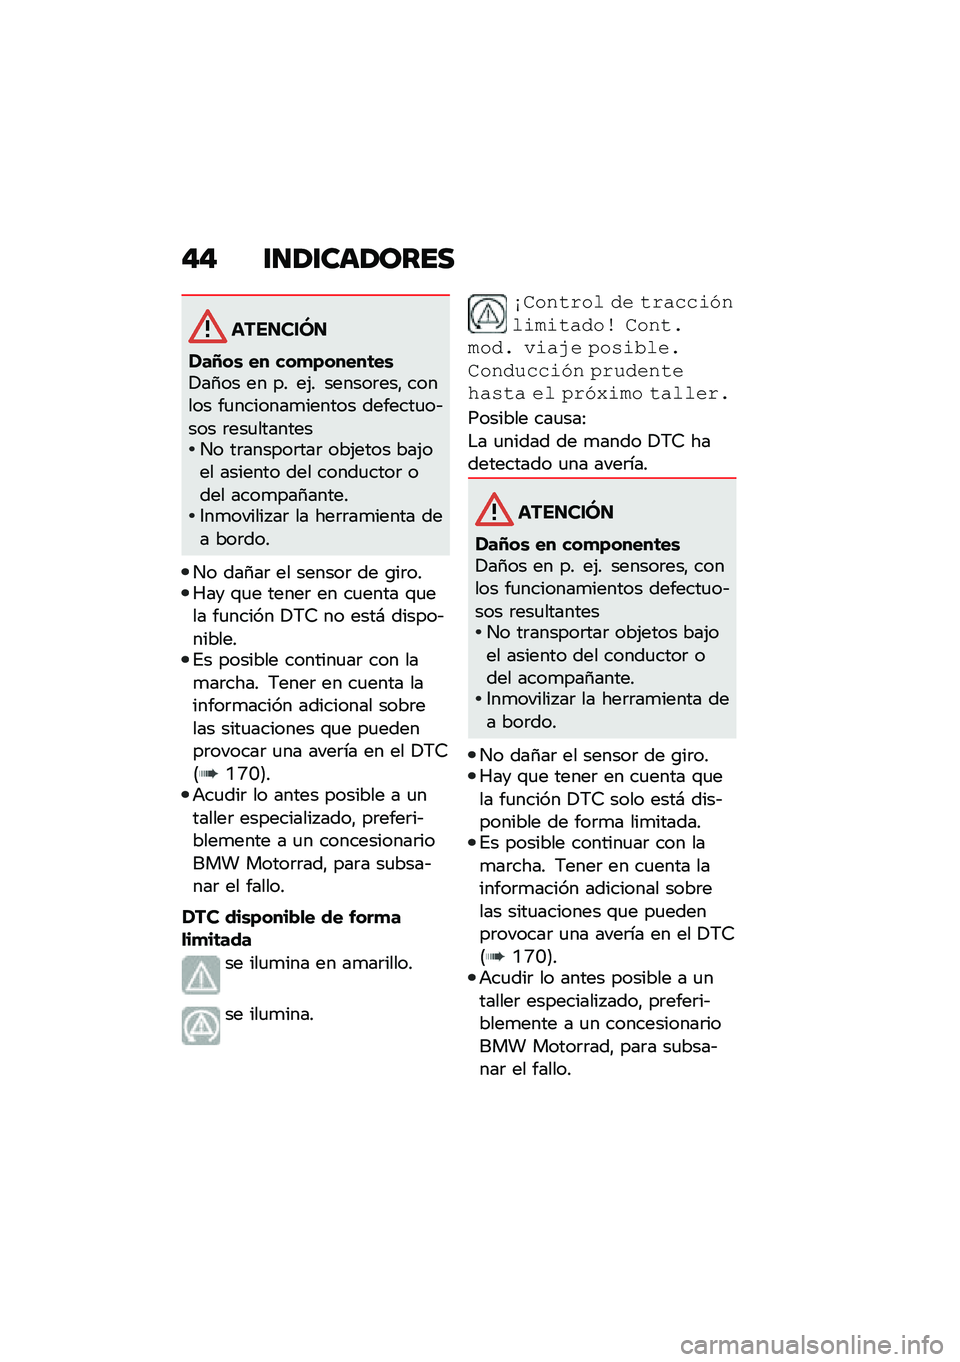 BMW MOTORRAD M 1000 RR 2021  Manual de instrucciones (in Spanish) �"�" �\f�
�1�\f���1����
��������
���J��\b �� ���
�(�����	��\b�!��1�� �� �� ��(� ������	���" ������ ��
�������
������ �������
��&��